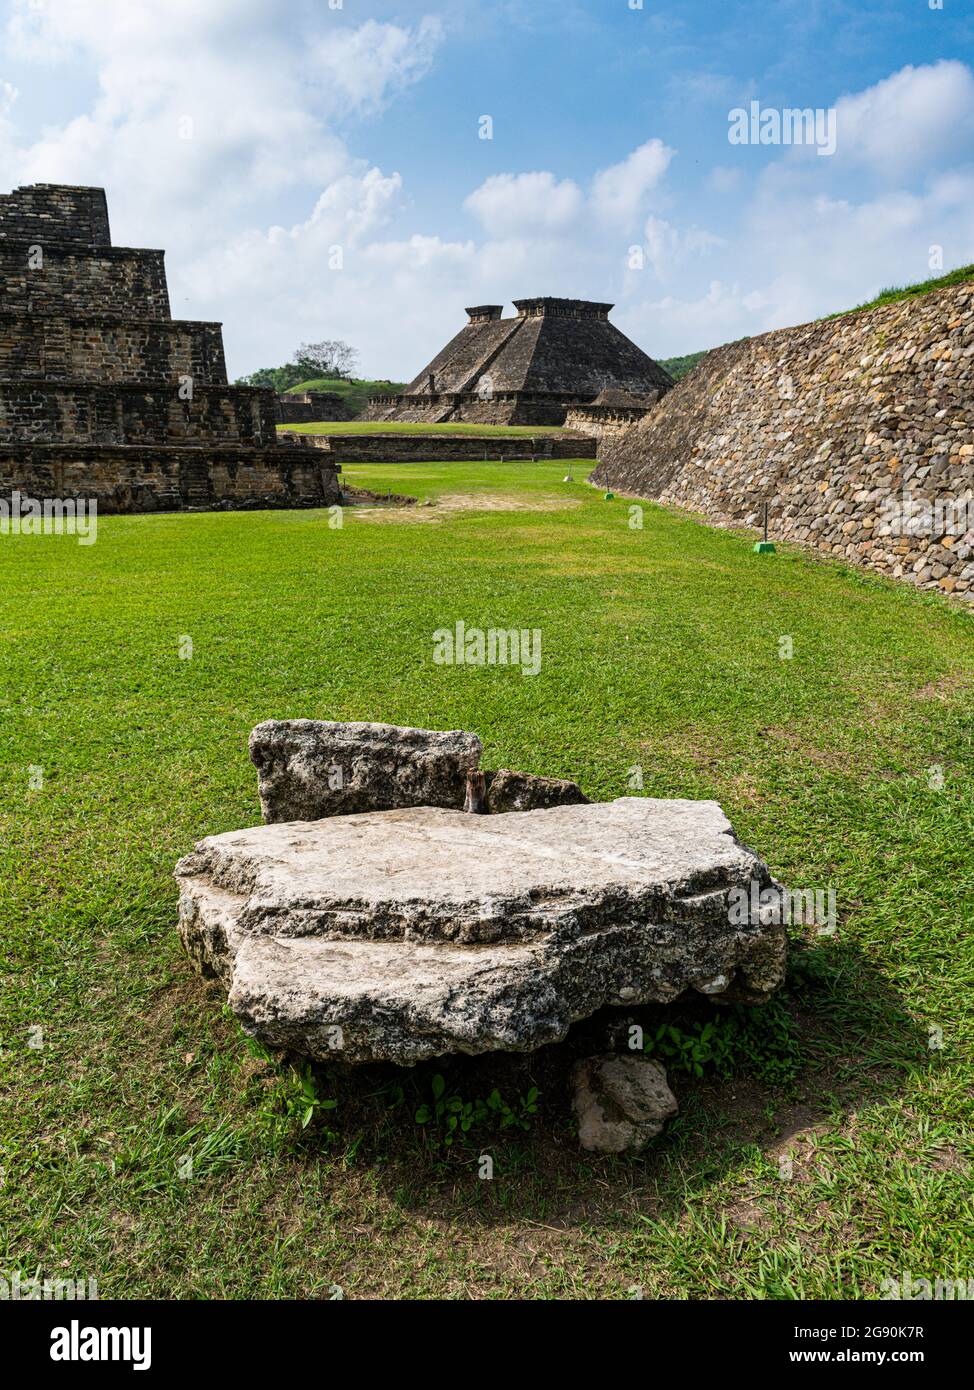 Rock on grass at El Tajin, Veracruz, Mexico Stock Photo